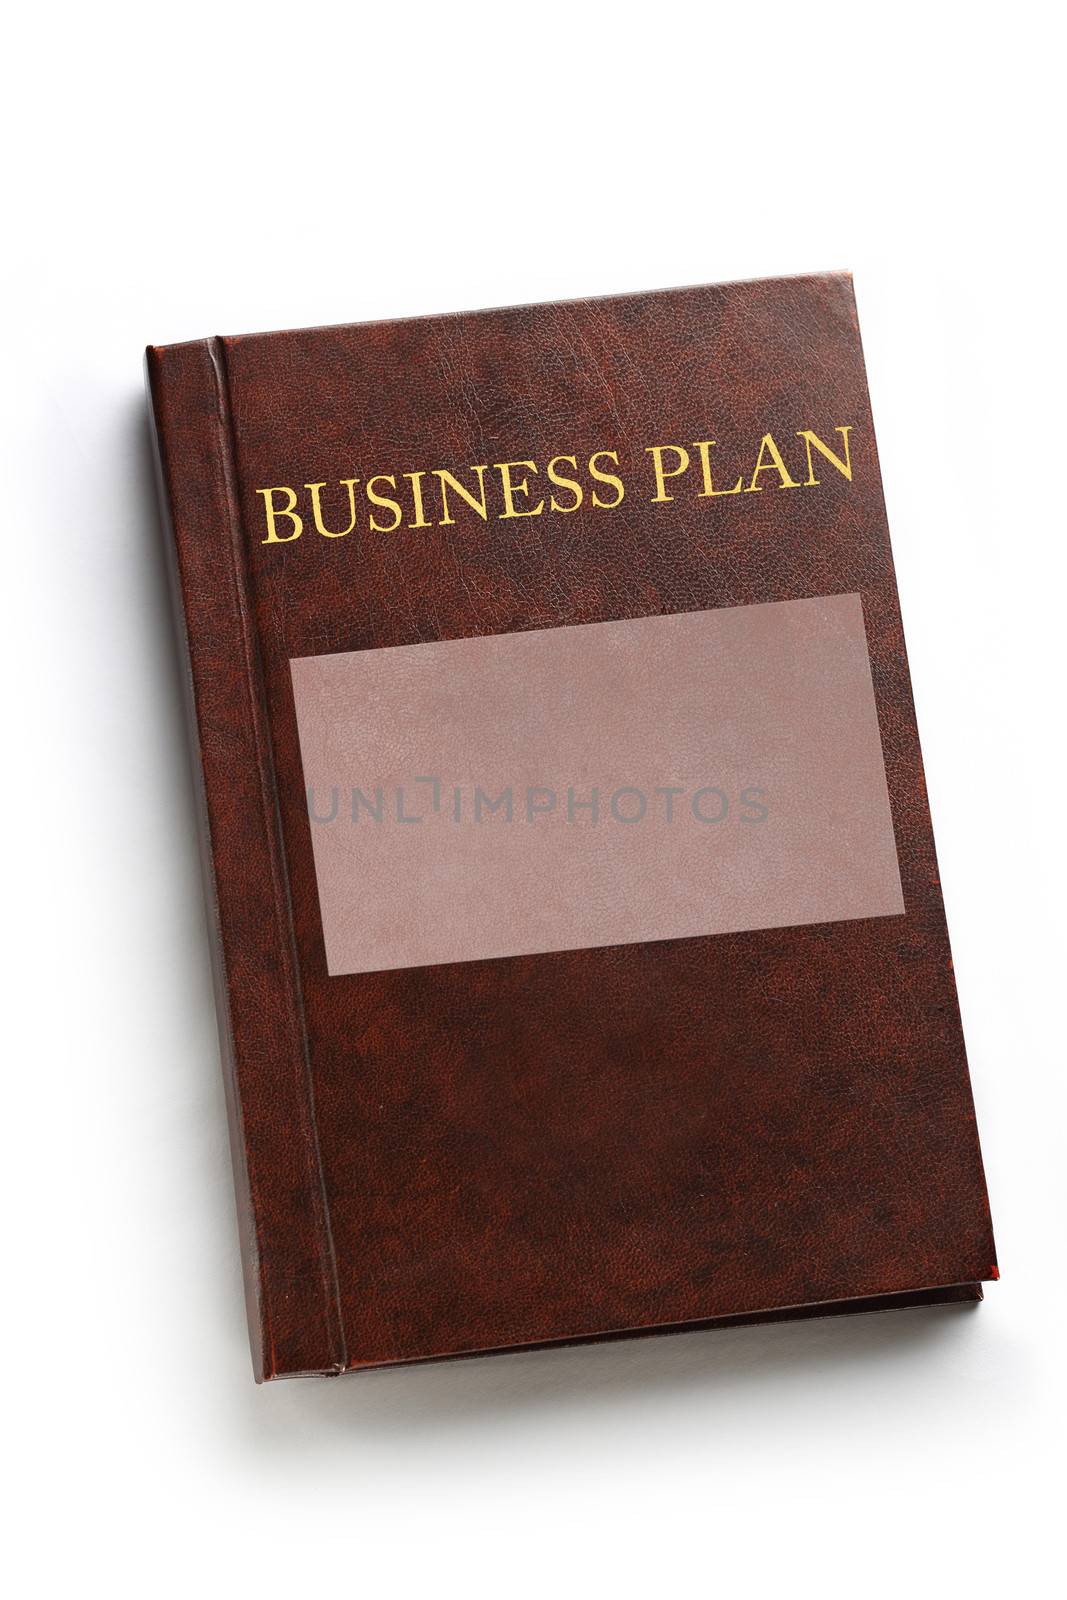 Business plan book on white by Garsya